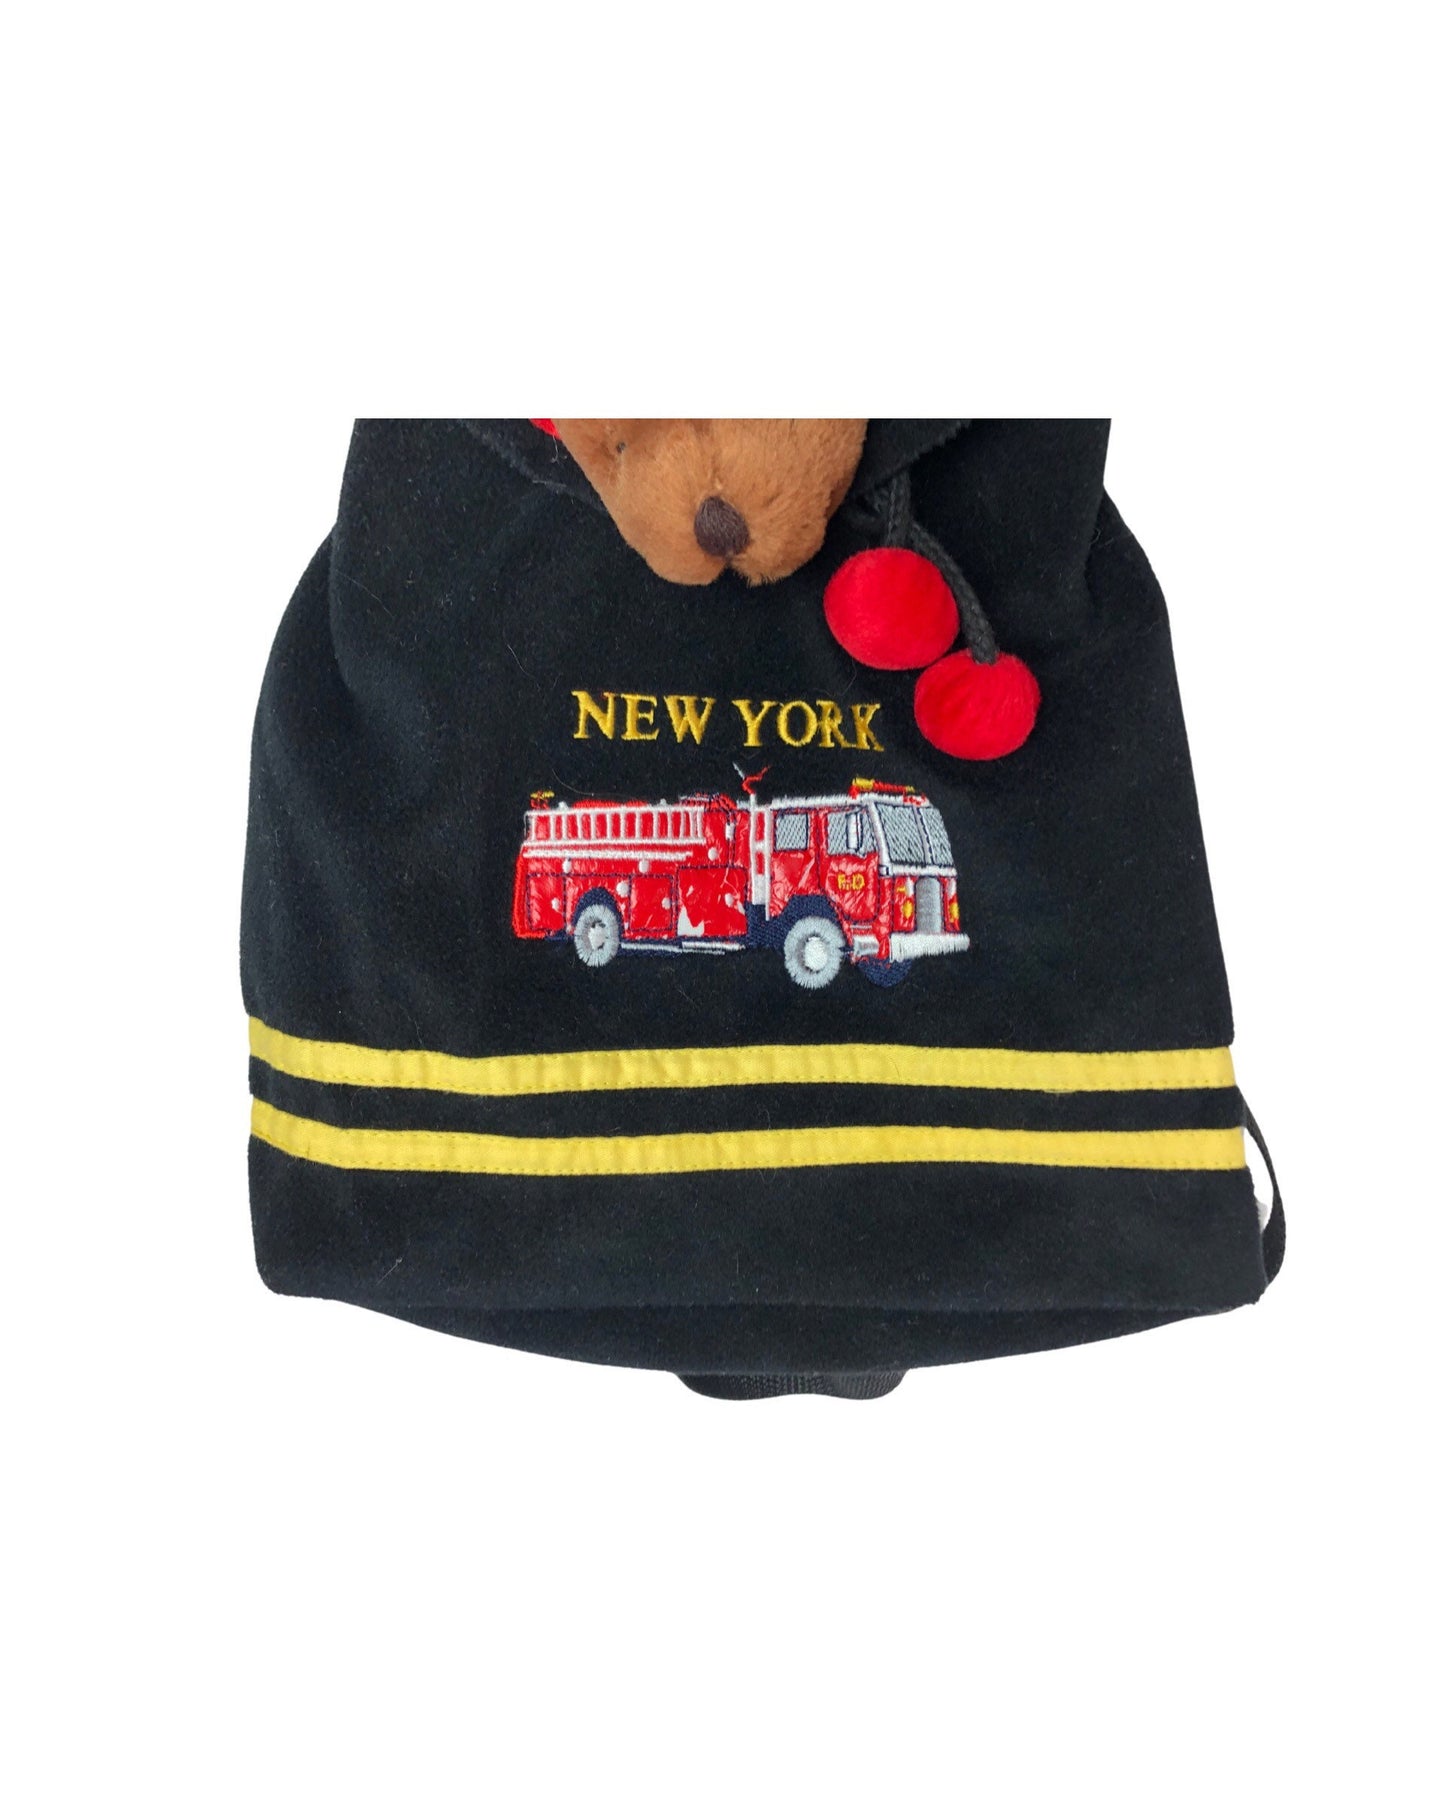 1999 NYFD New York City Fire Department Teddy Bear Plush Mini Backpack Purse